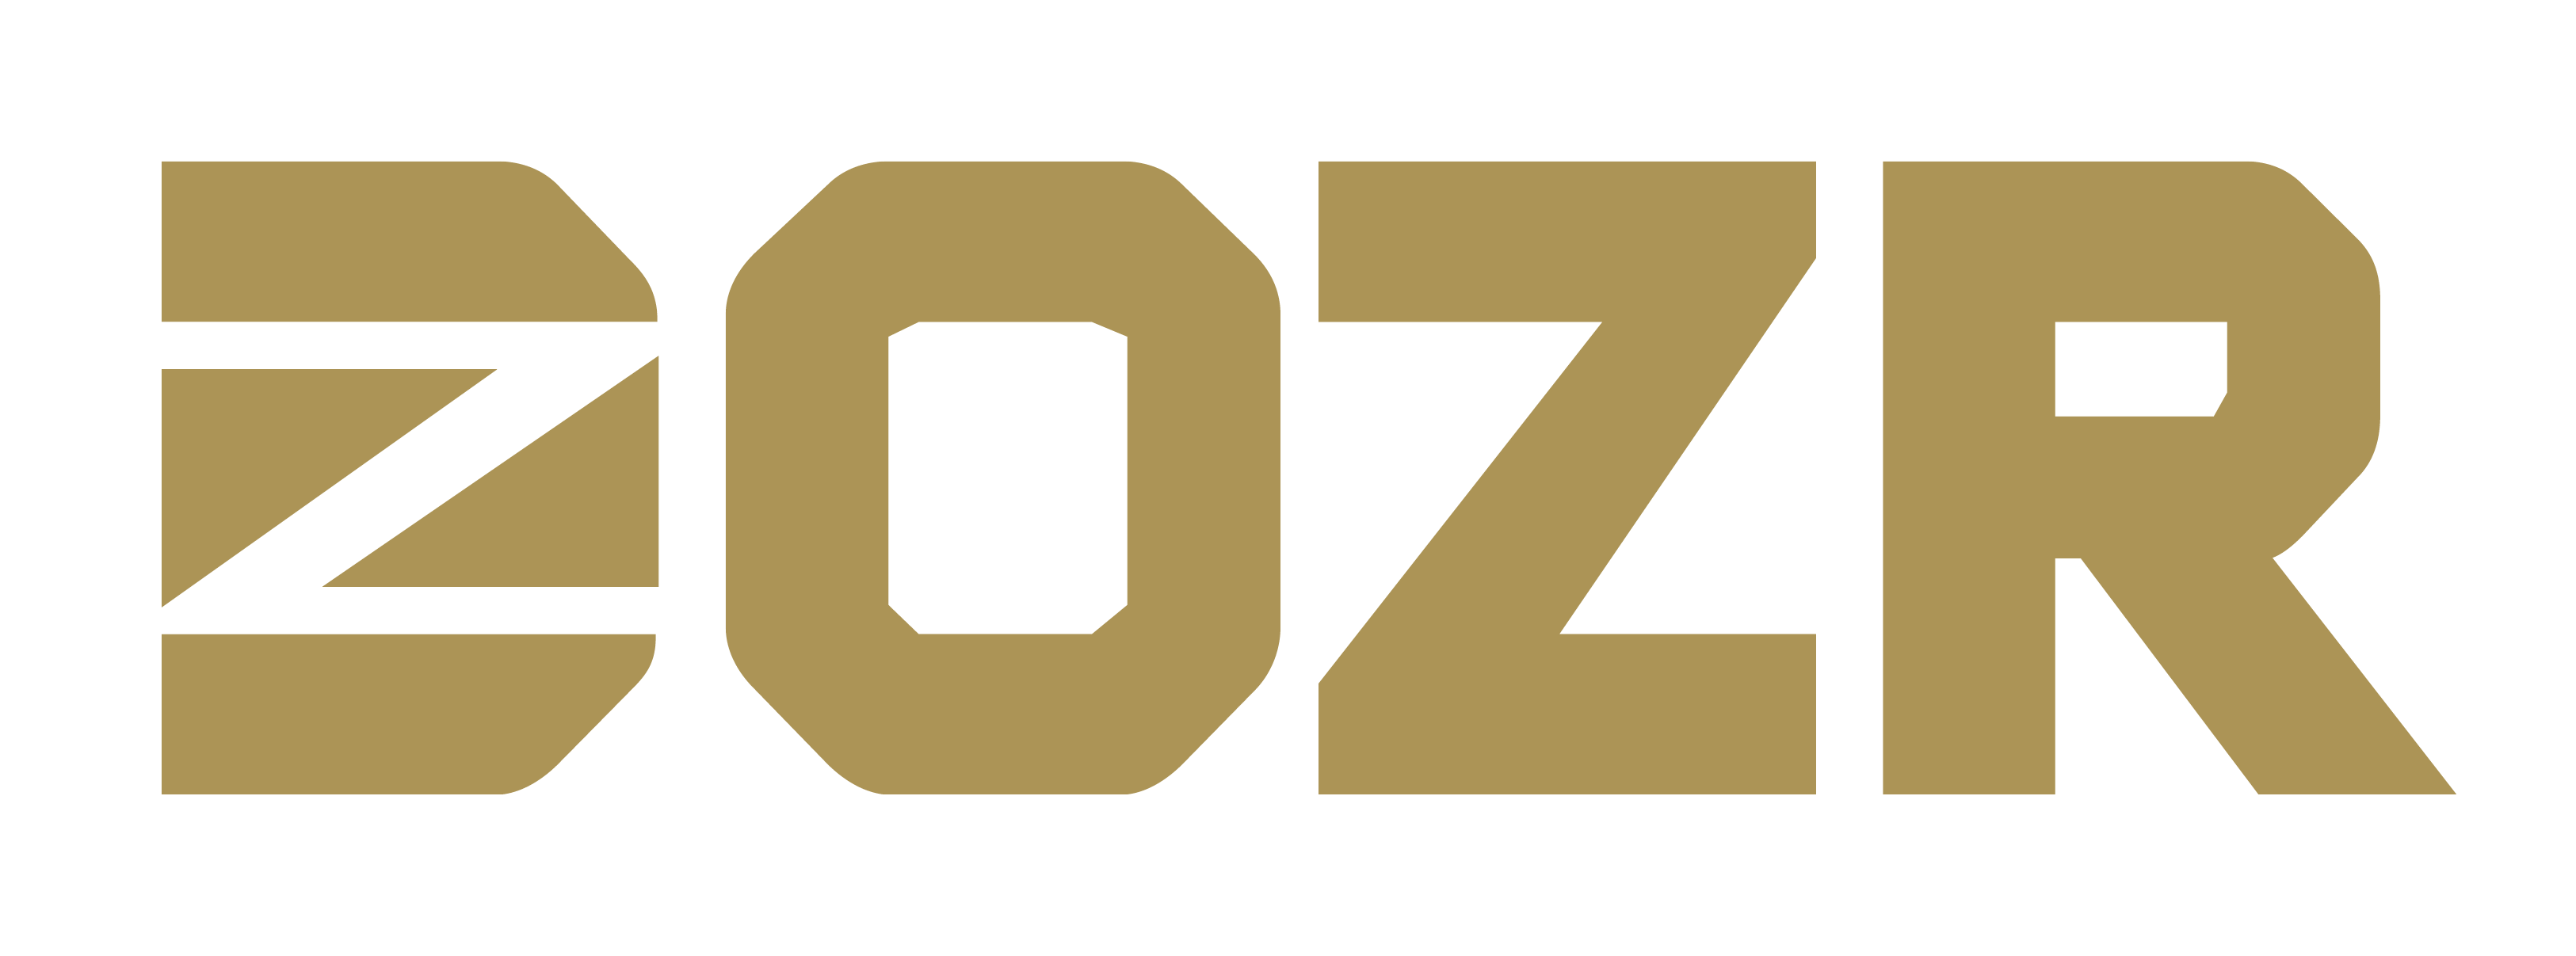 DOZR Empowers Rental